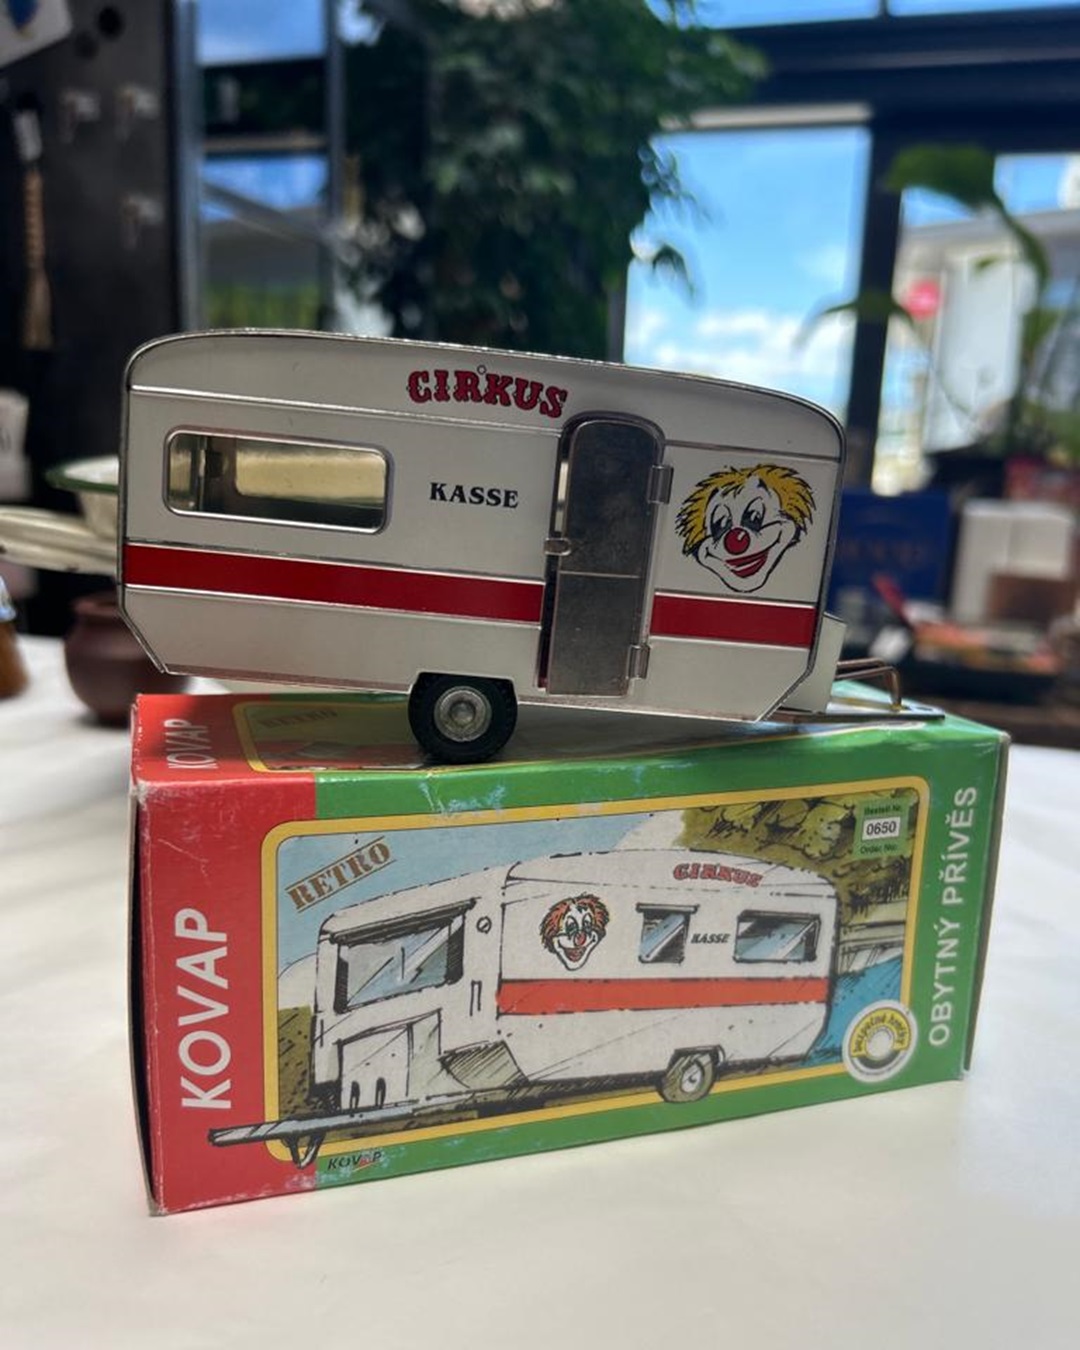 Collectable tin circus caravan toy on box on shelf